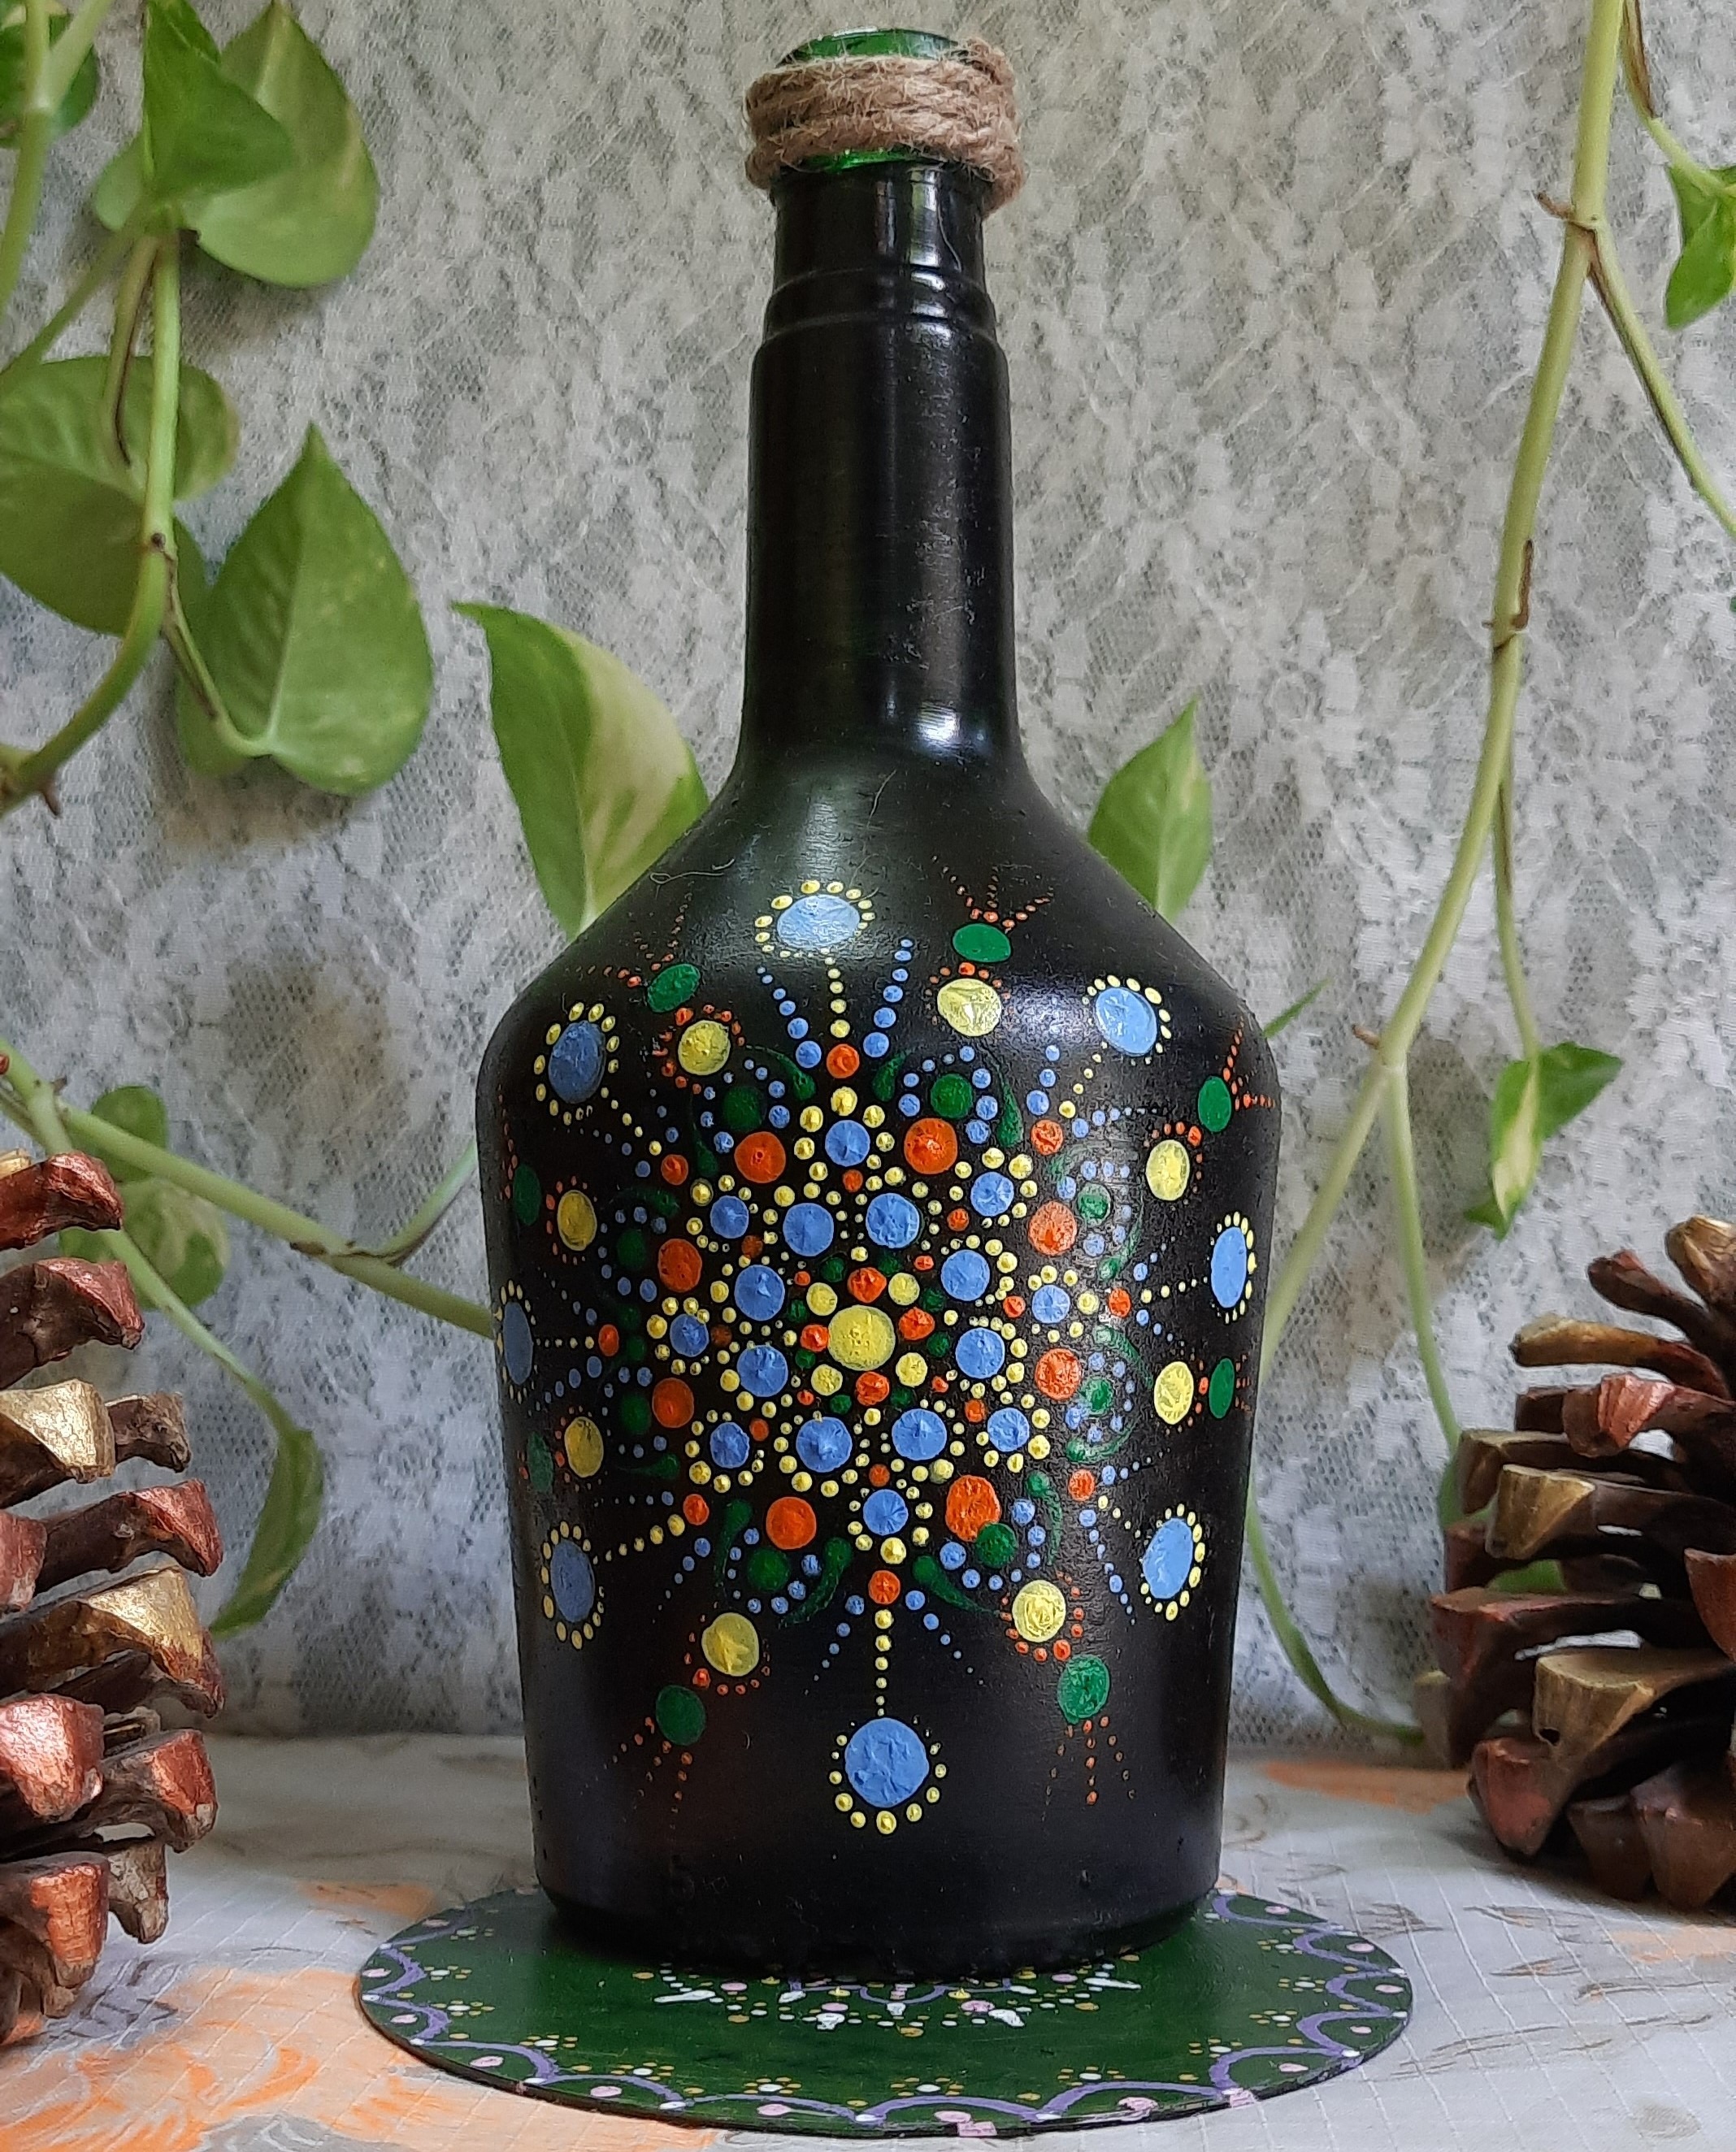 Home decor with bottle vase